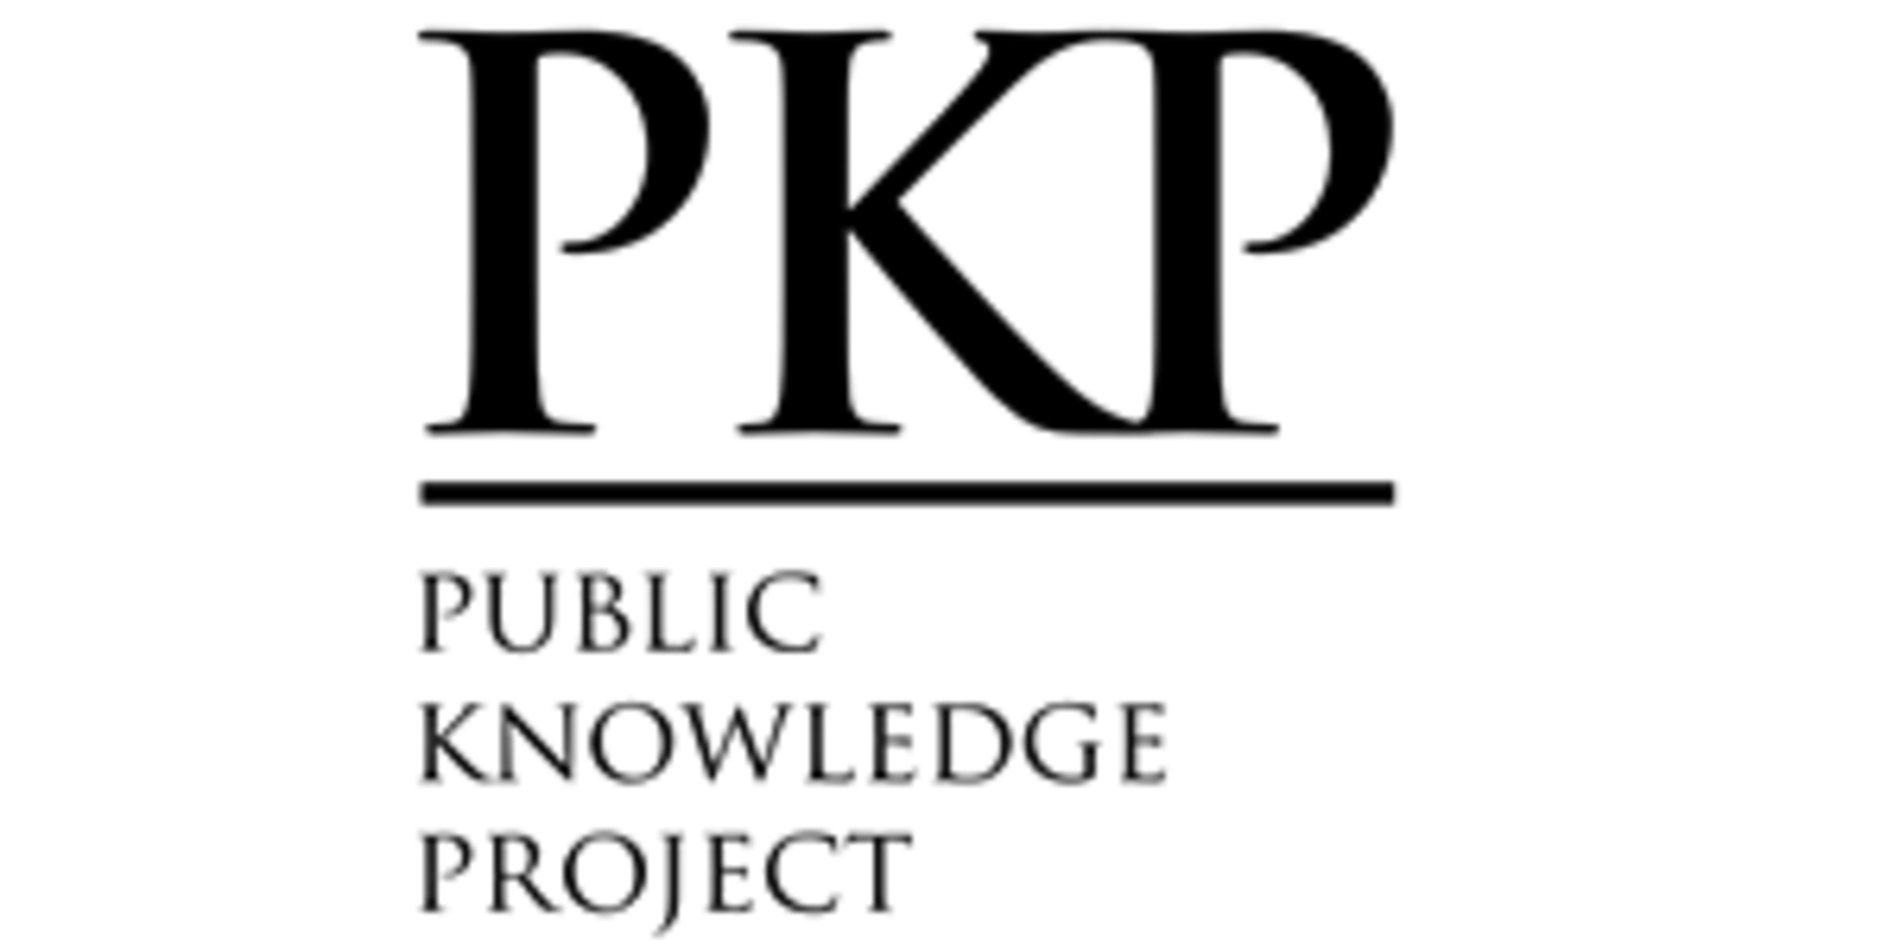 Public Knowledge Project logo